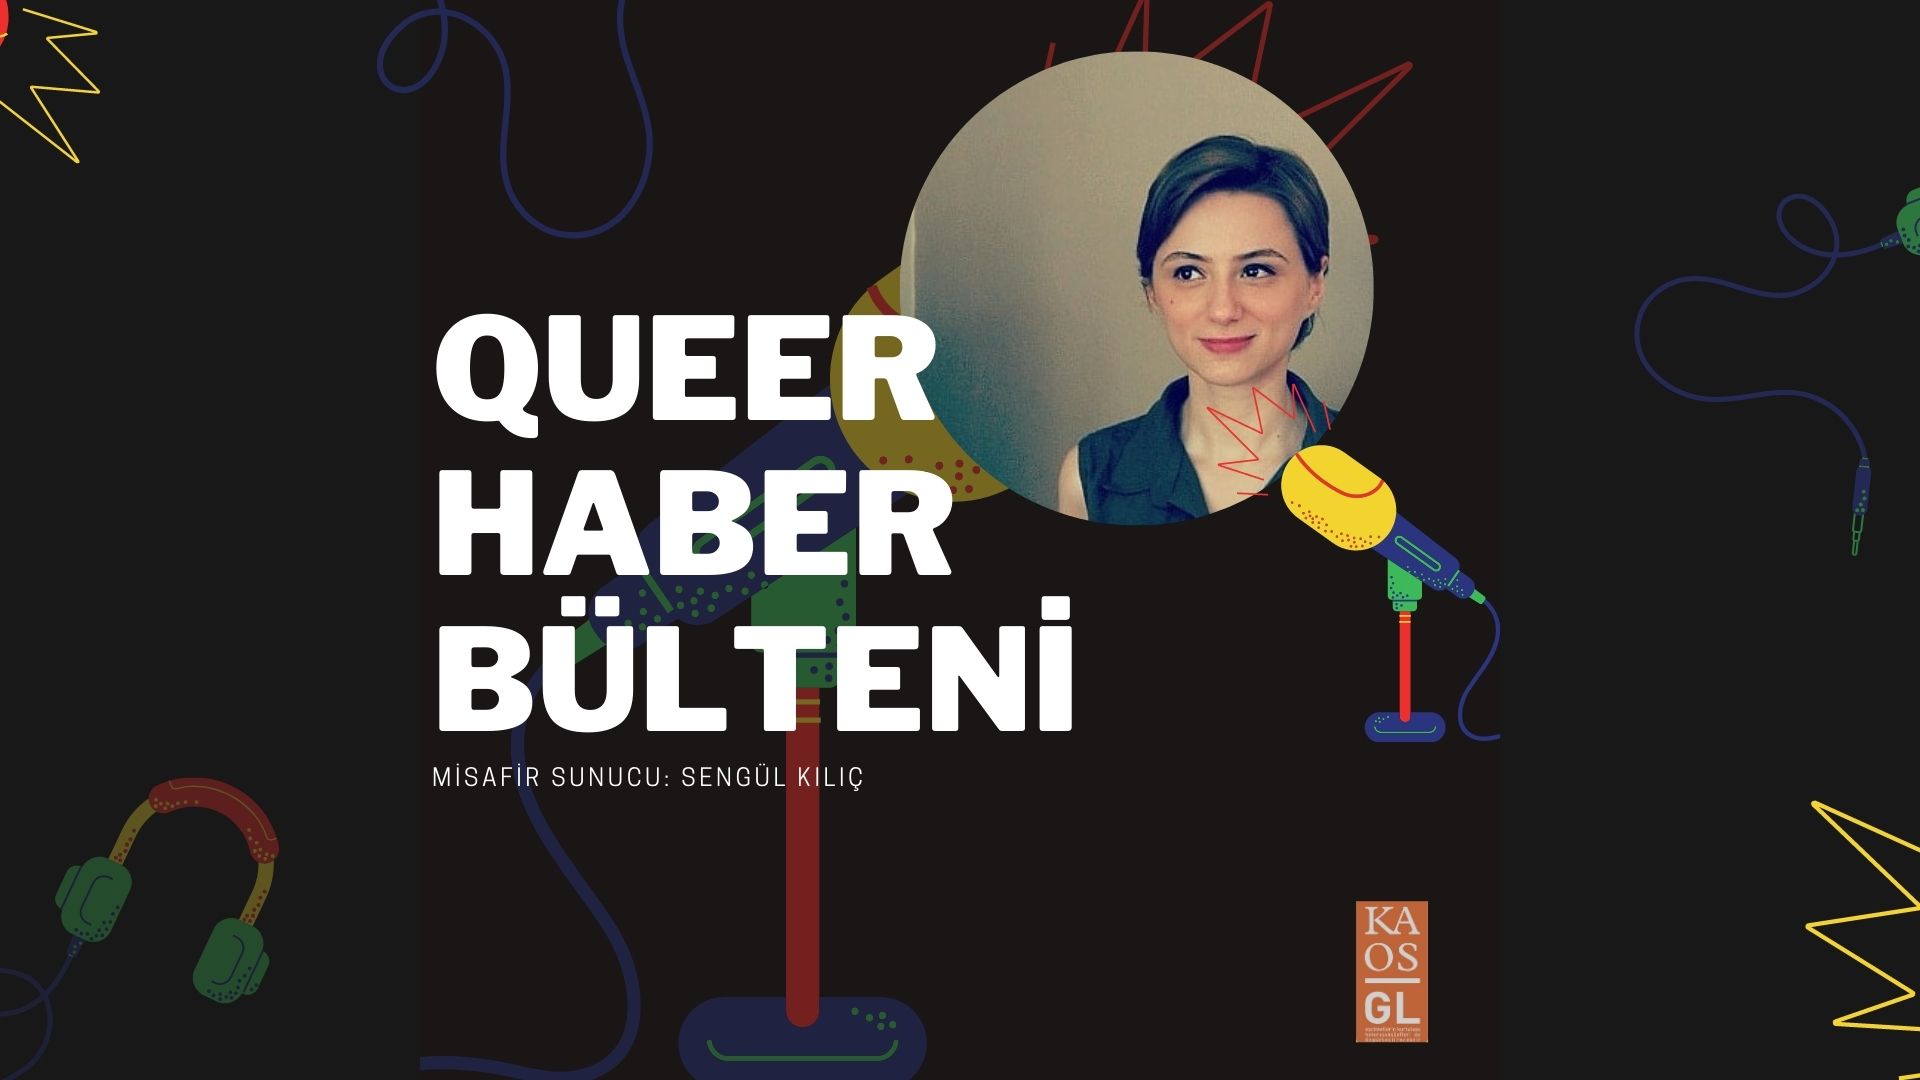 Podcast: 21-27 Kasım Queer Haber Bülteni | Kaos GL - LGBTİ+ Haber Portalı